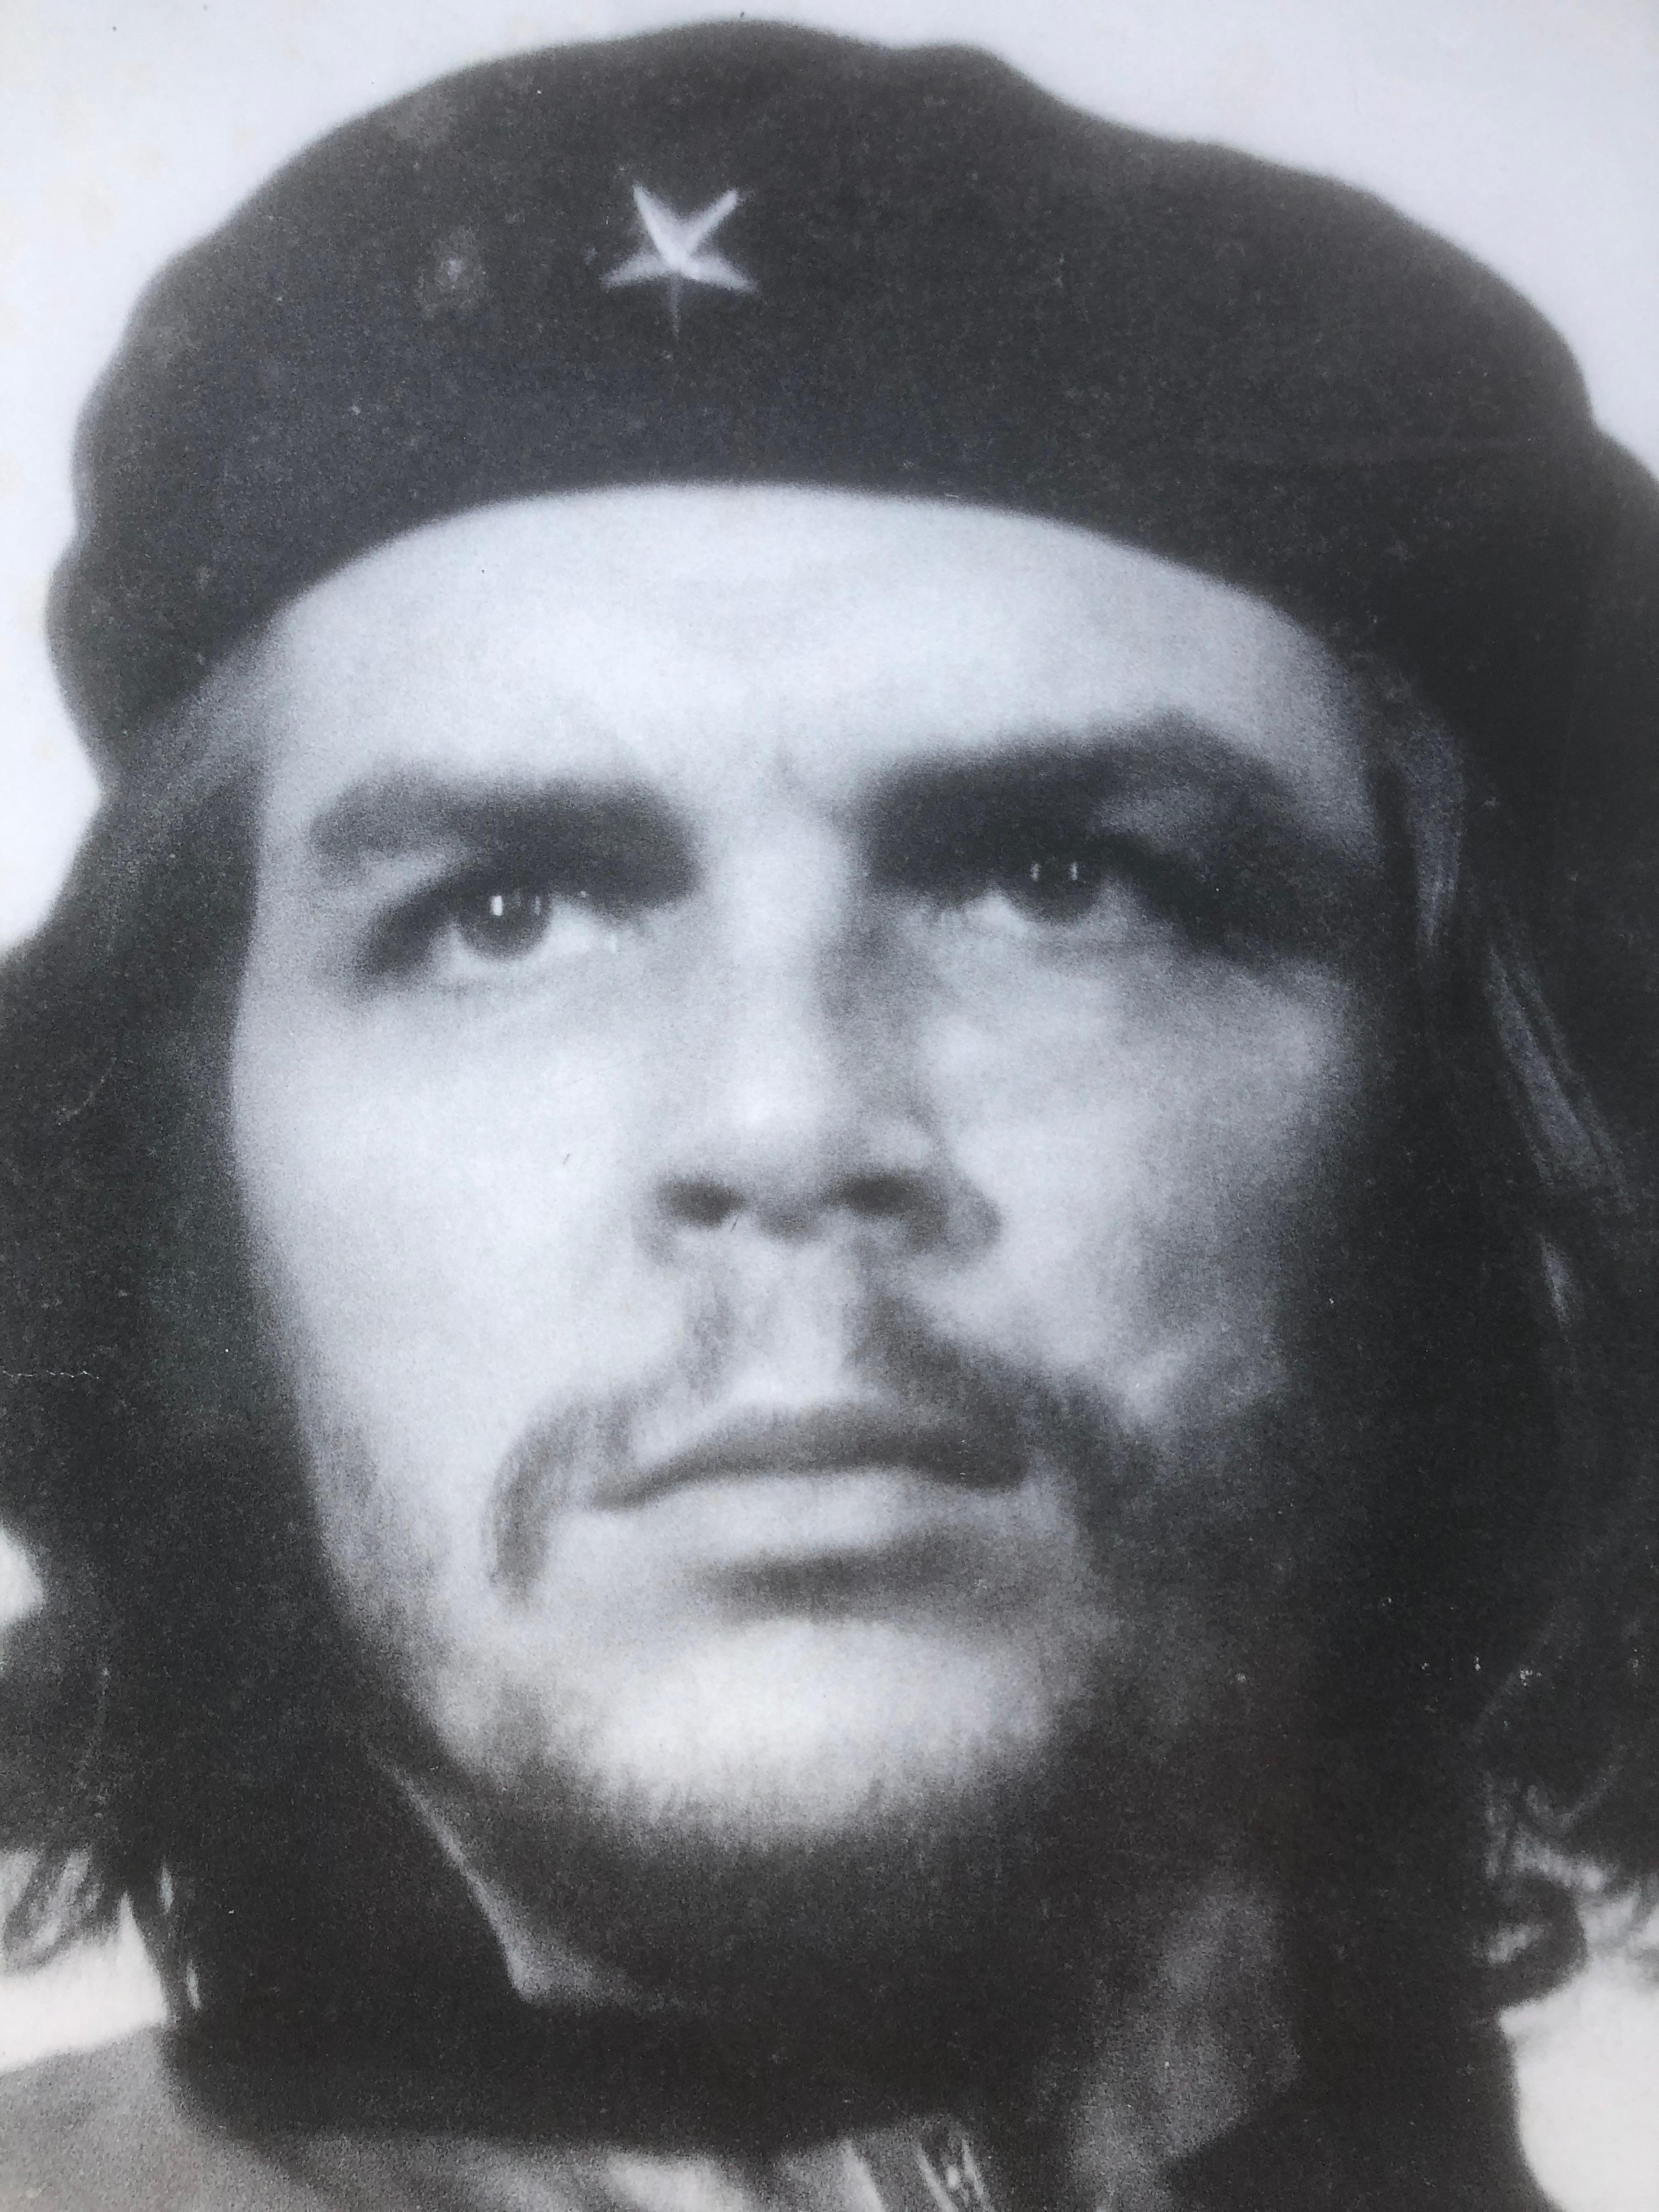 Guerillero Heroico Che Guevara hand signed photograph certified - Modern Photograph by Alberto Korda